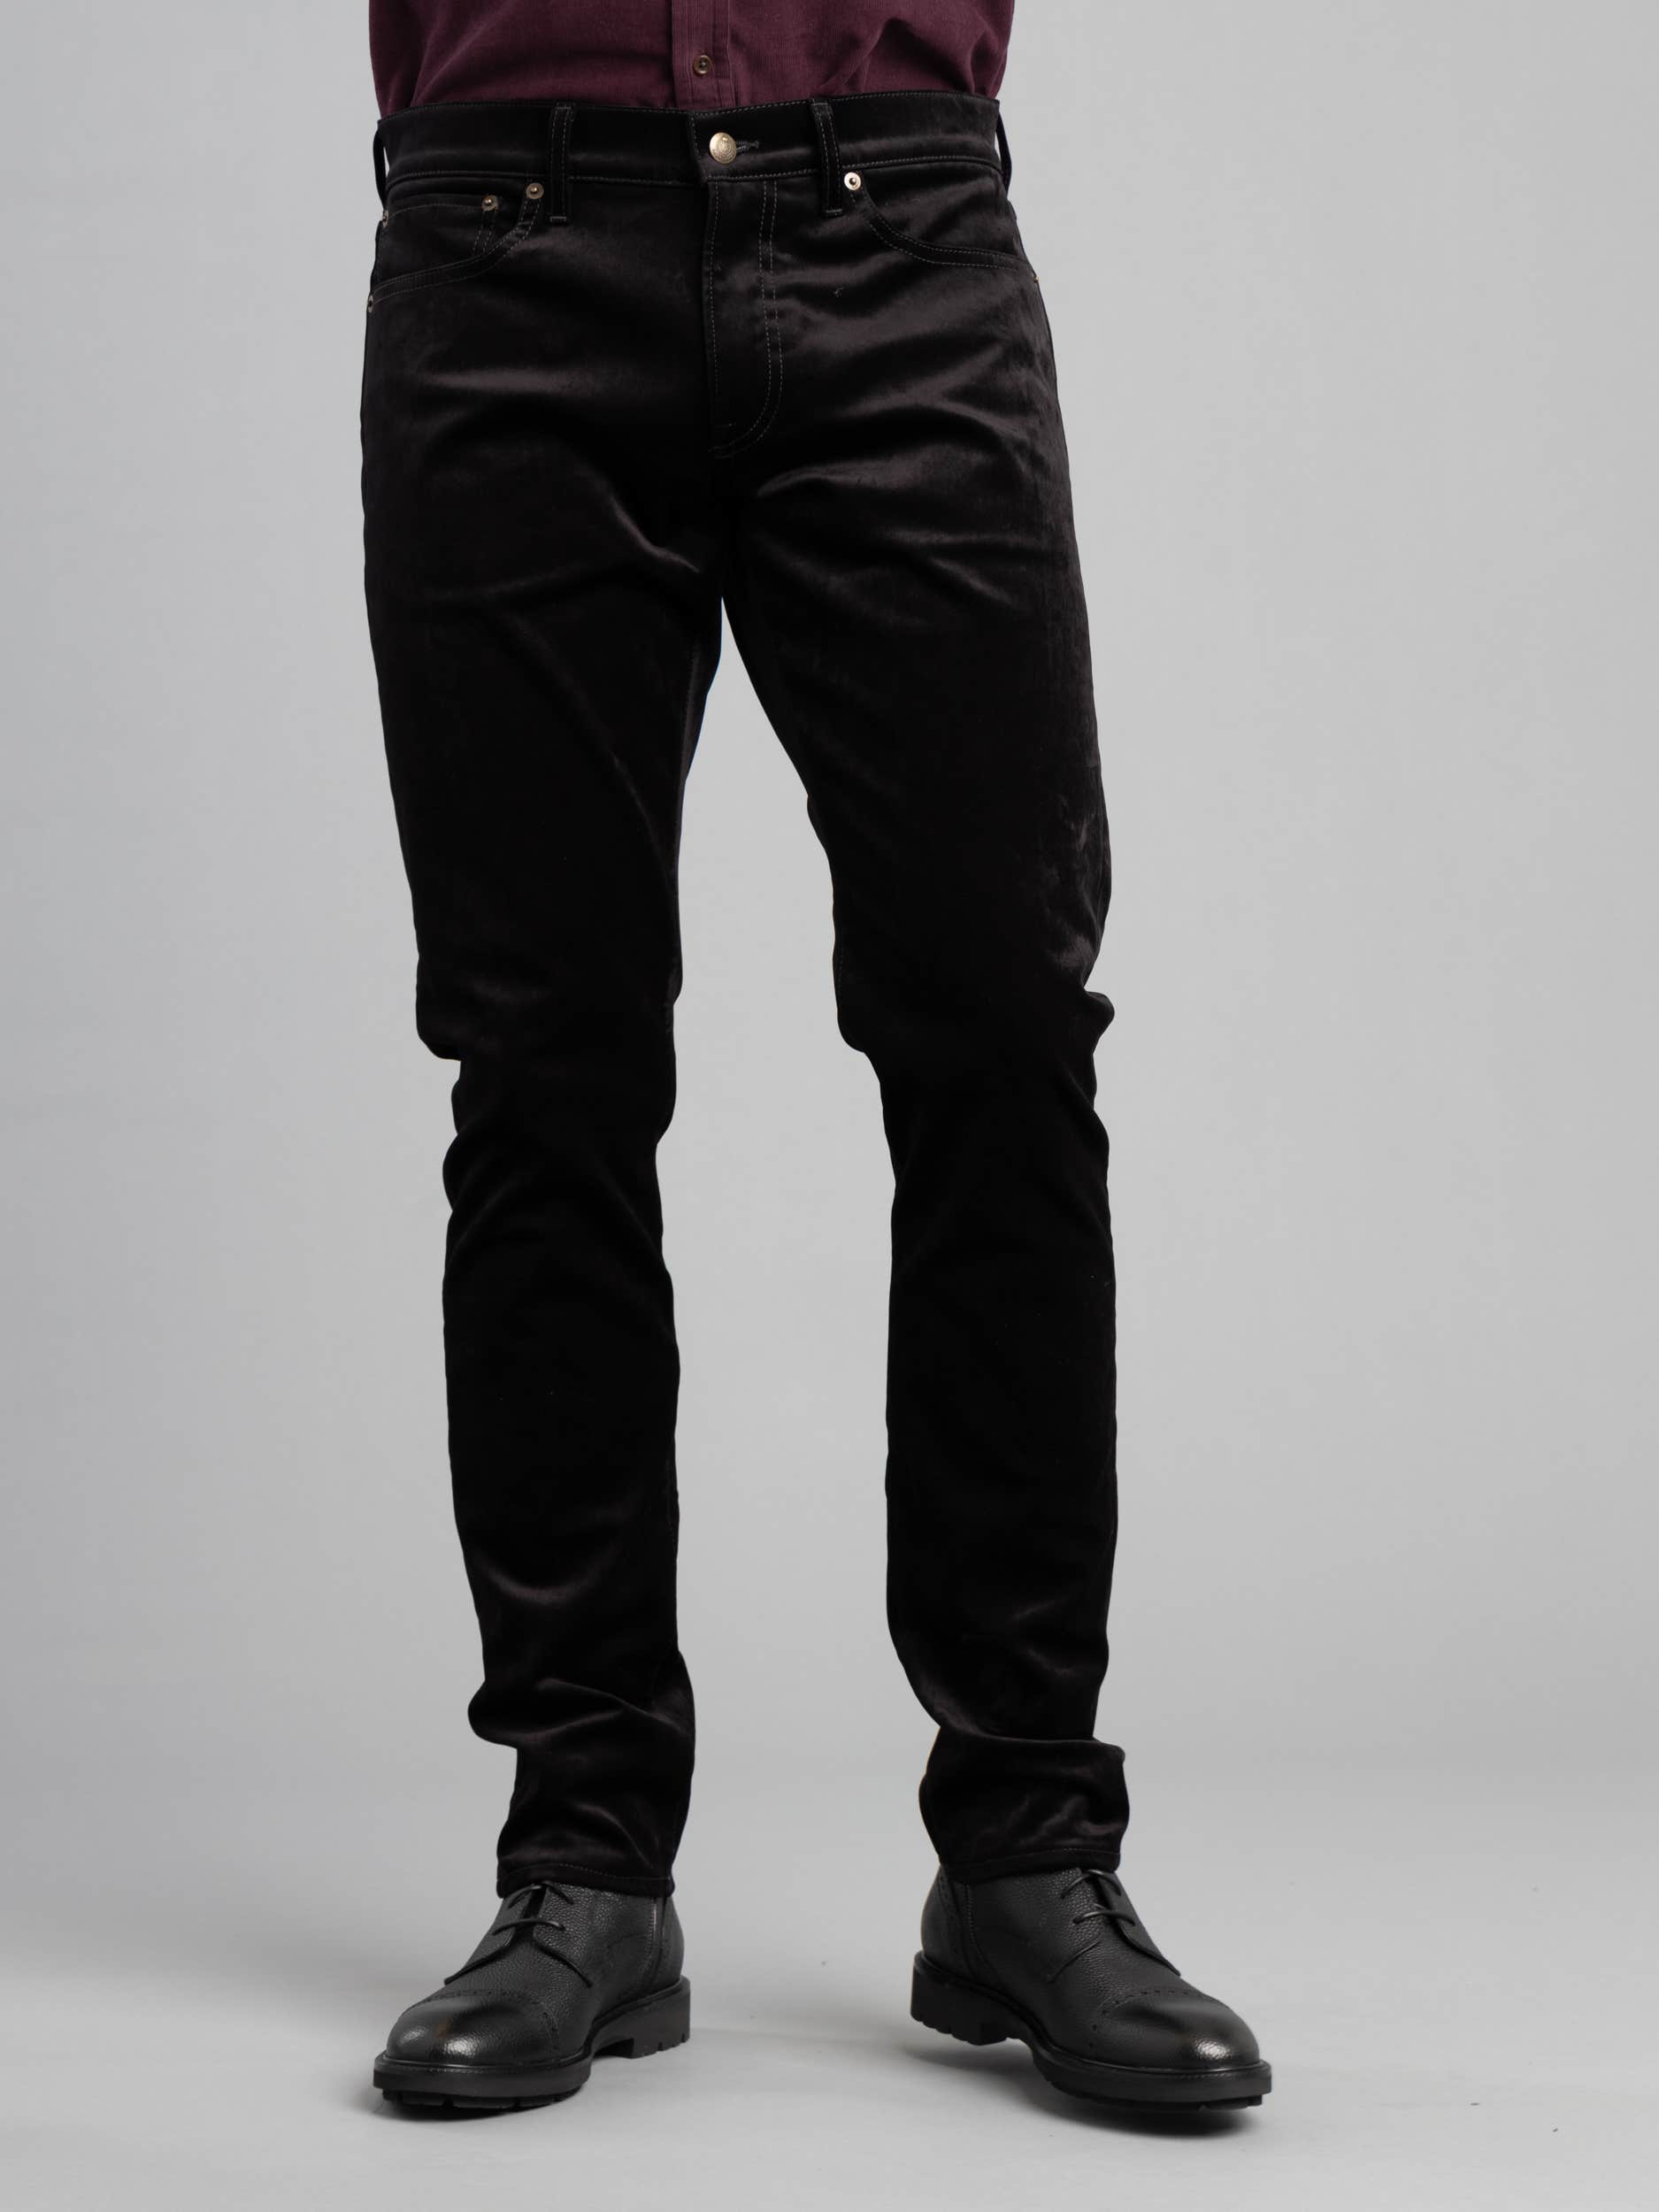 Men's Flat Front & Pleated Slacks (Pants)  Black velvet pants, Velvet pants,  Black velvet dress